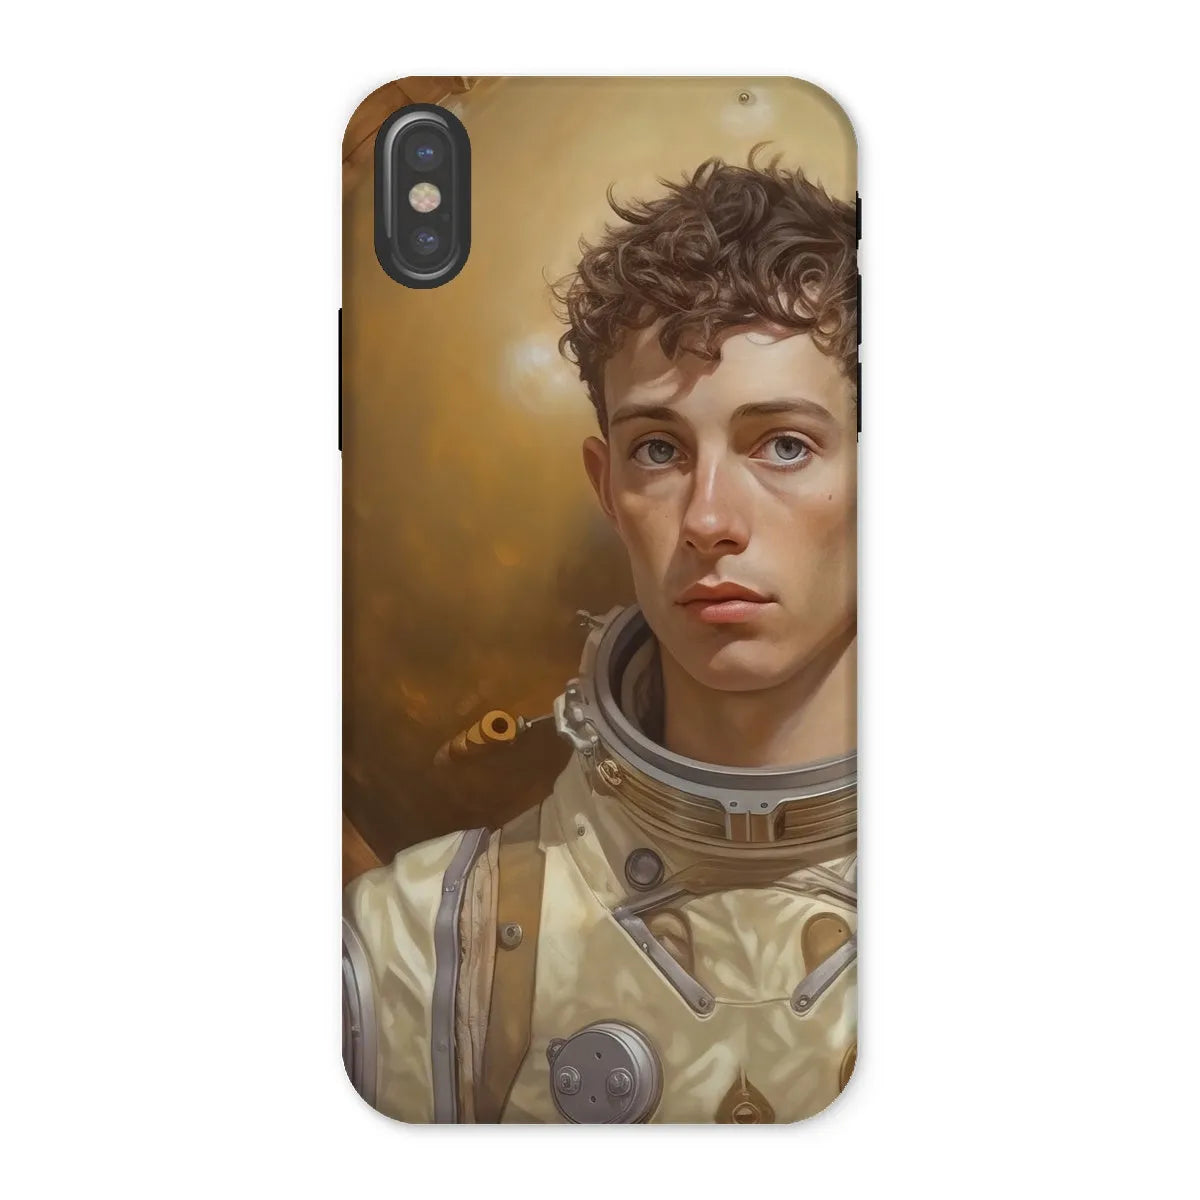 Noah The Gay Astronaut - Lgbtq Art Phone Case - Iphone x / Matte - Mobile Phone Cases - Aesthetic Art